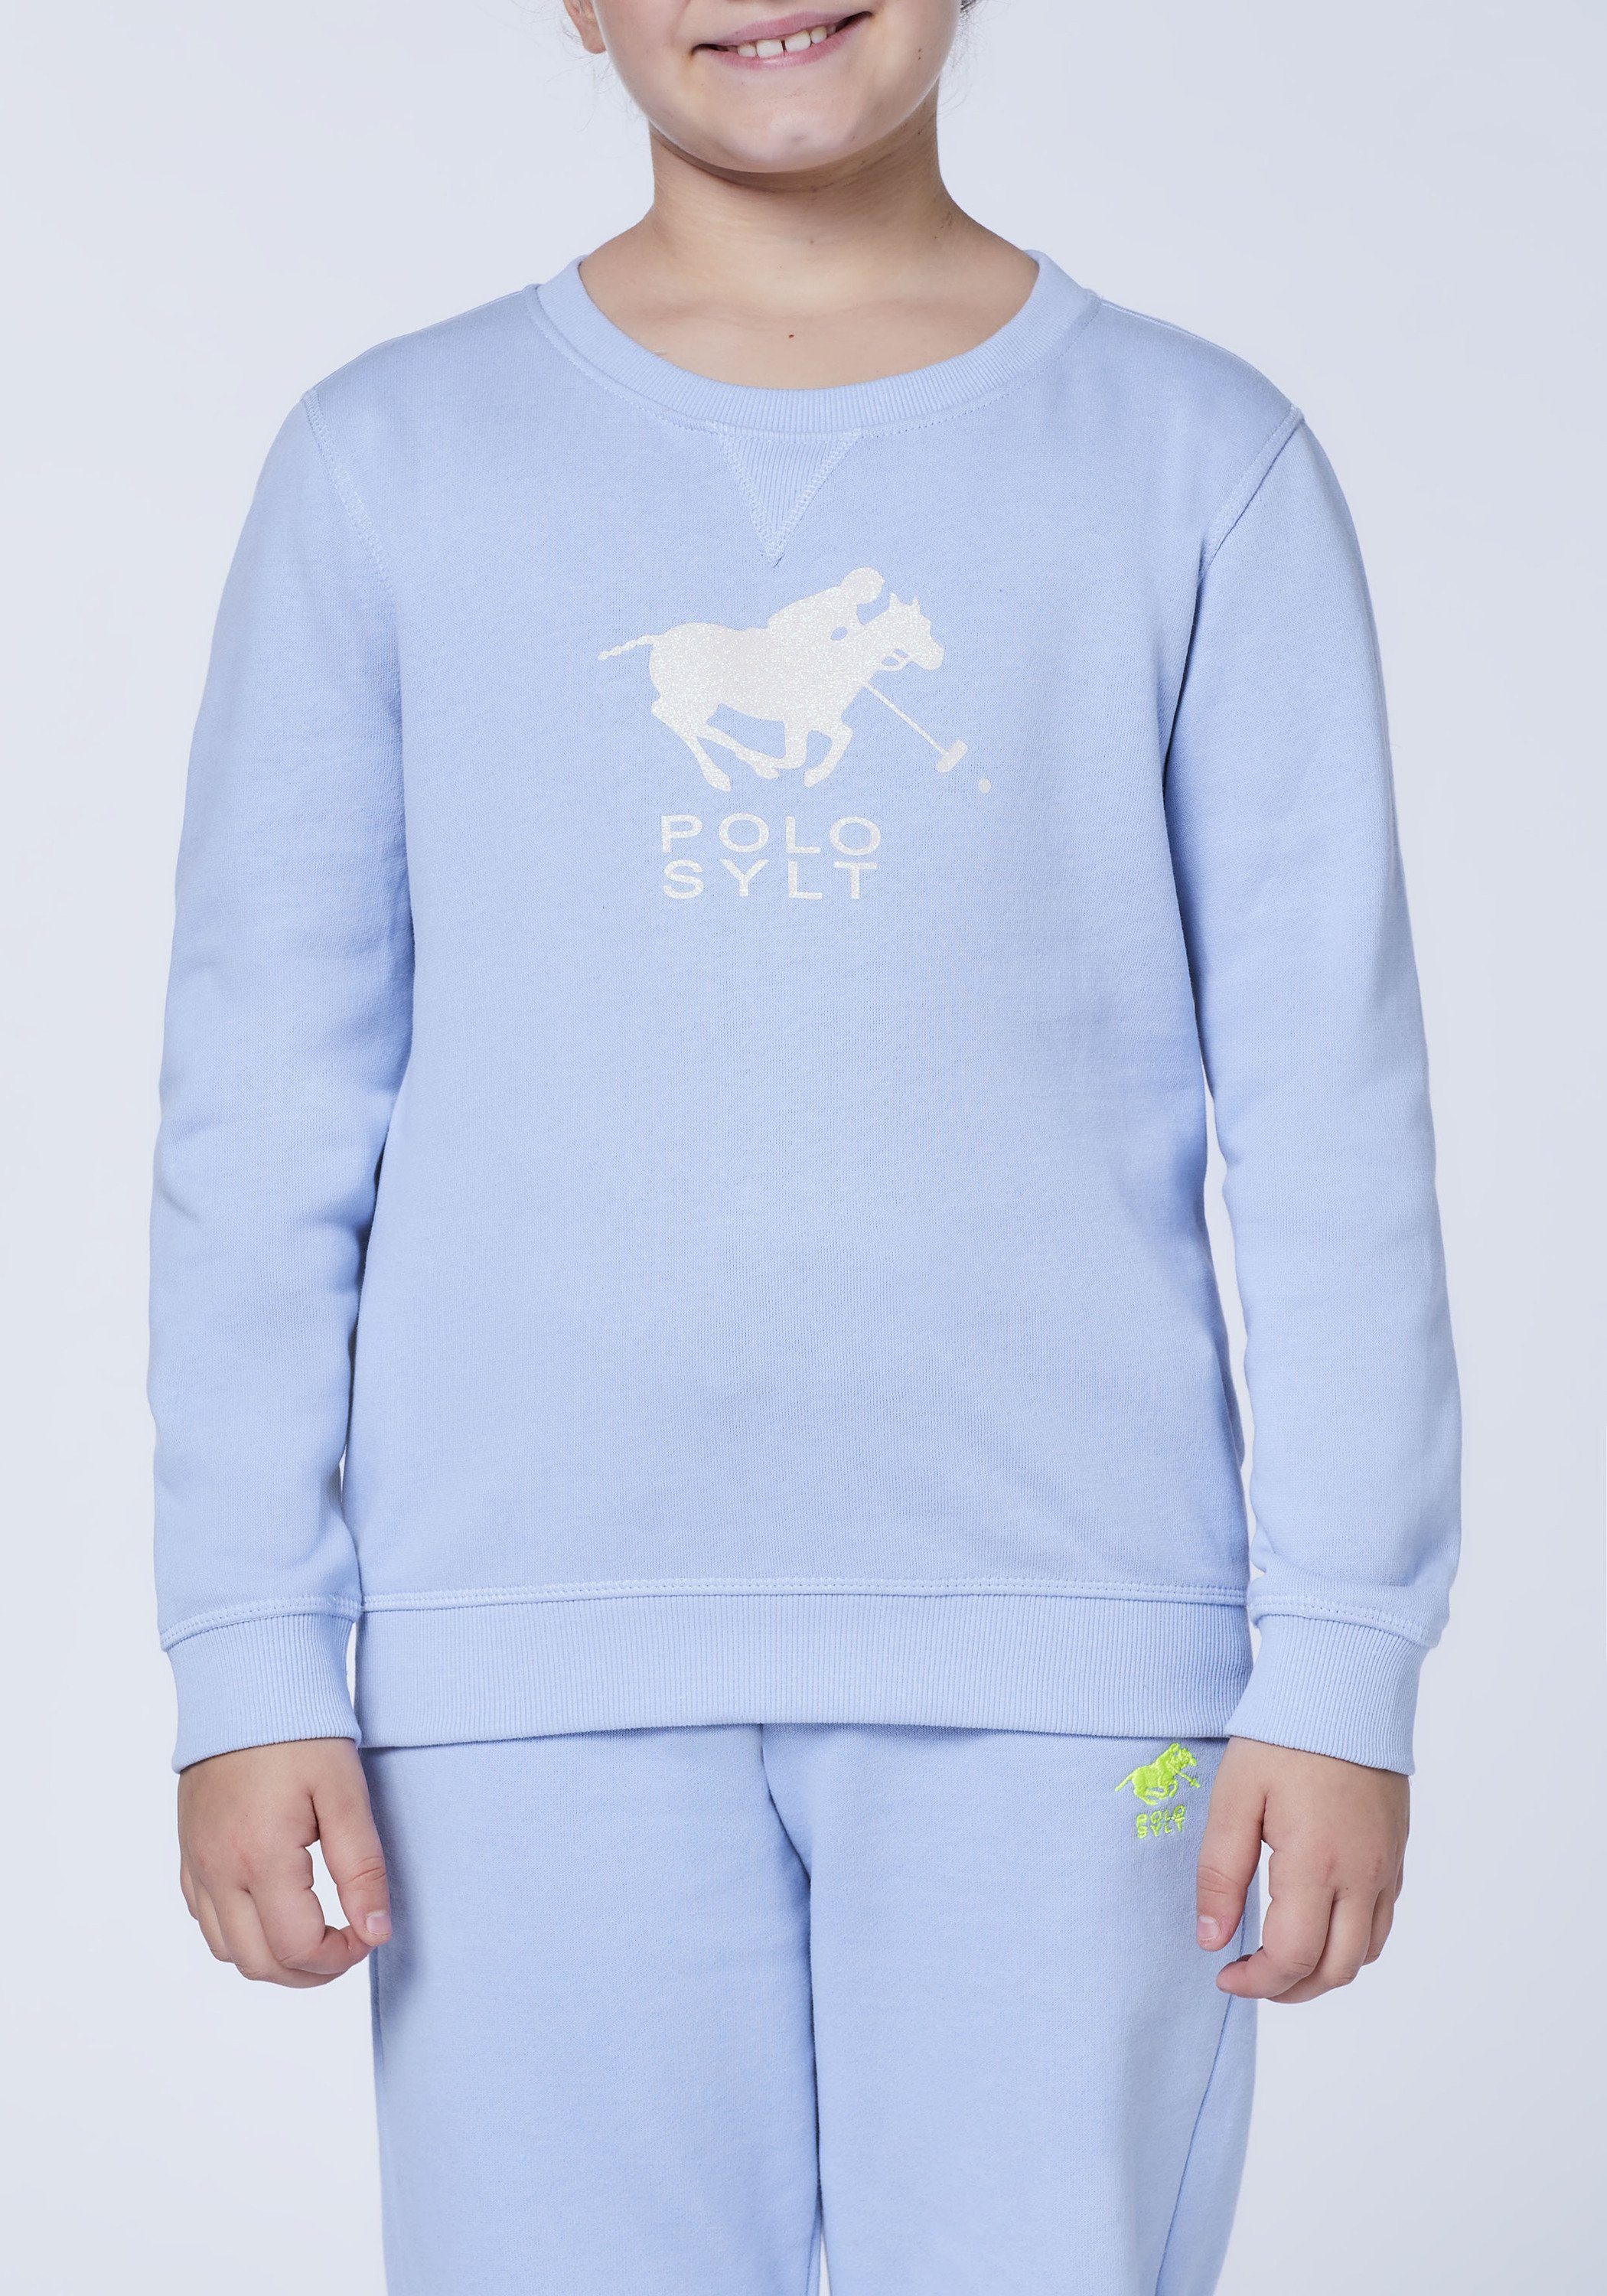 Polo Sylt Sweatshirt mit Brunnera Glitzer-Label-Print Blue